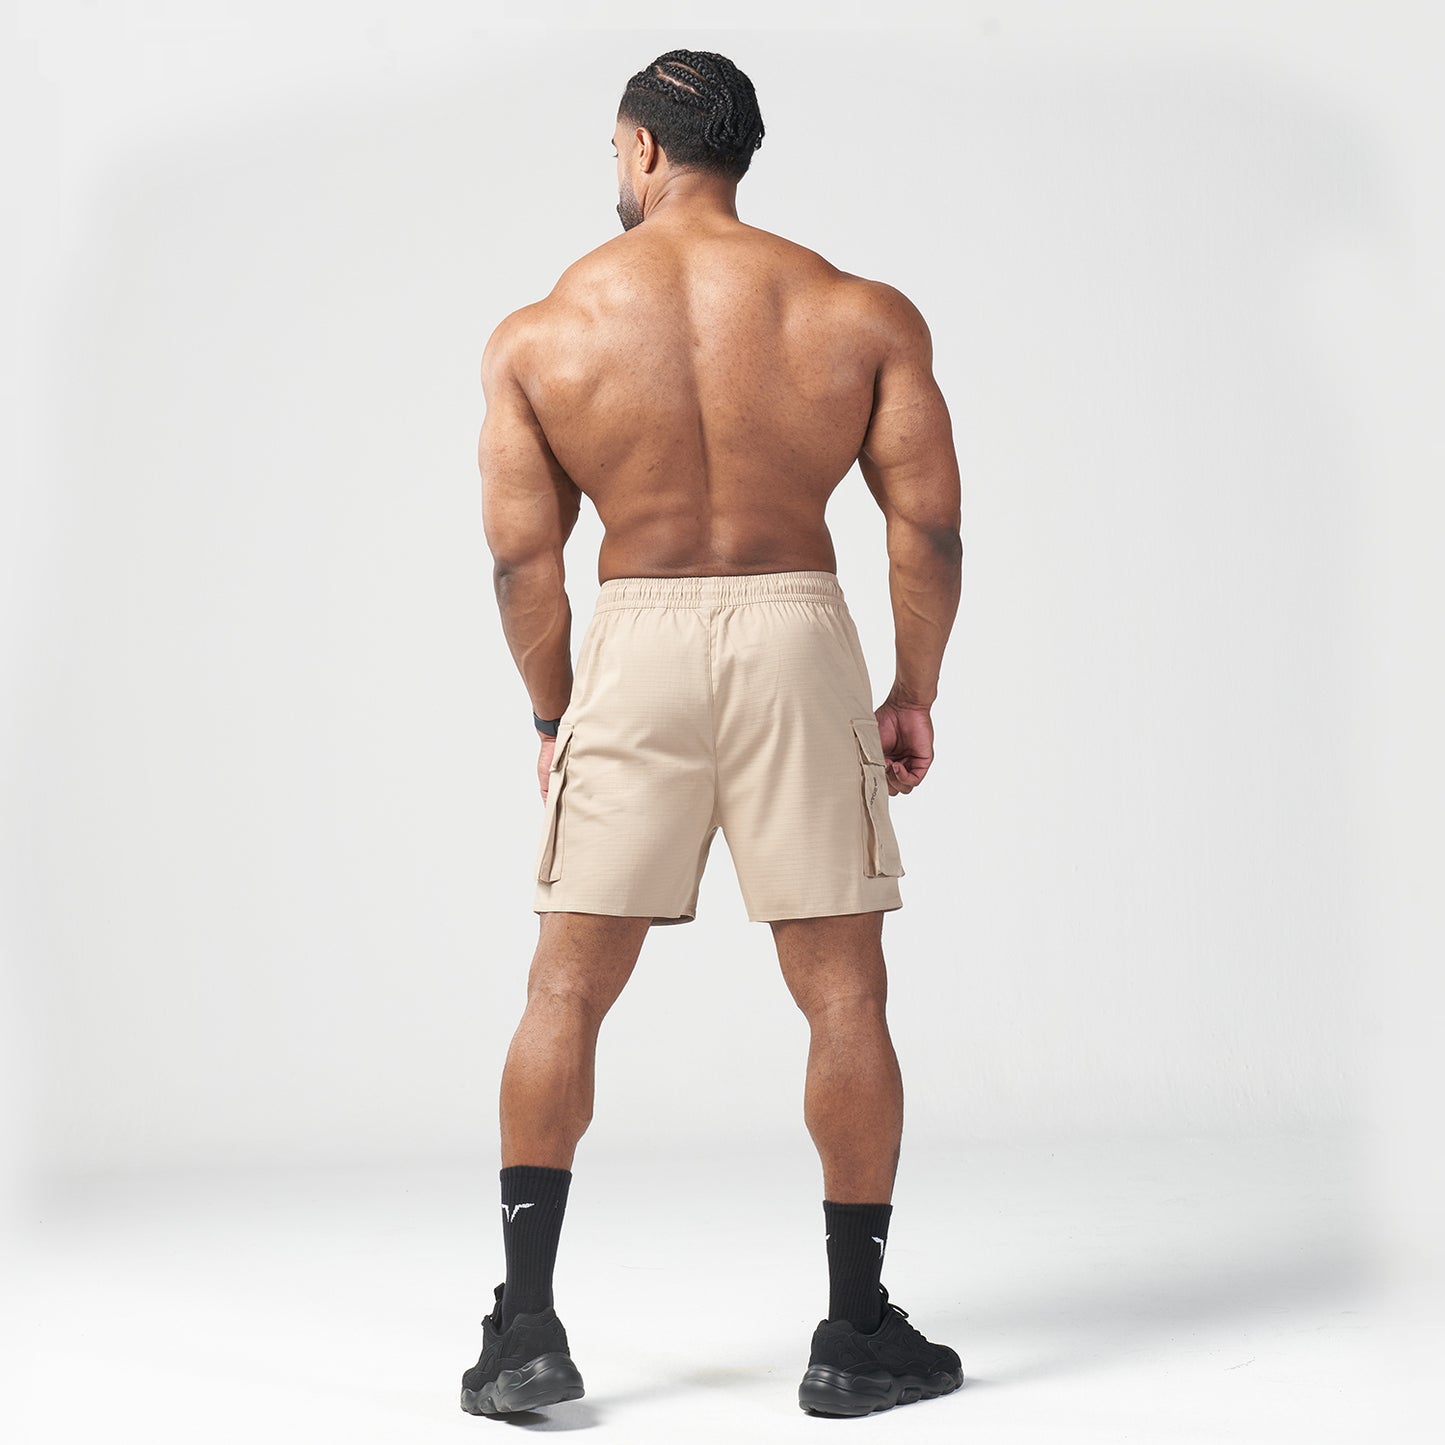 squatwolf-gym-wear-code-urban-cargo-shorts-cobblestone-workout-short-for-men